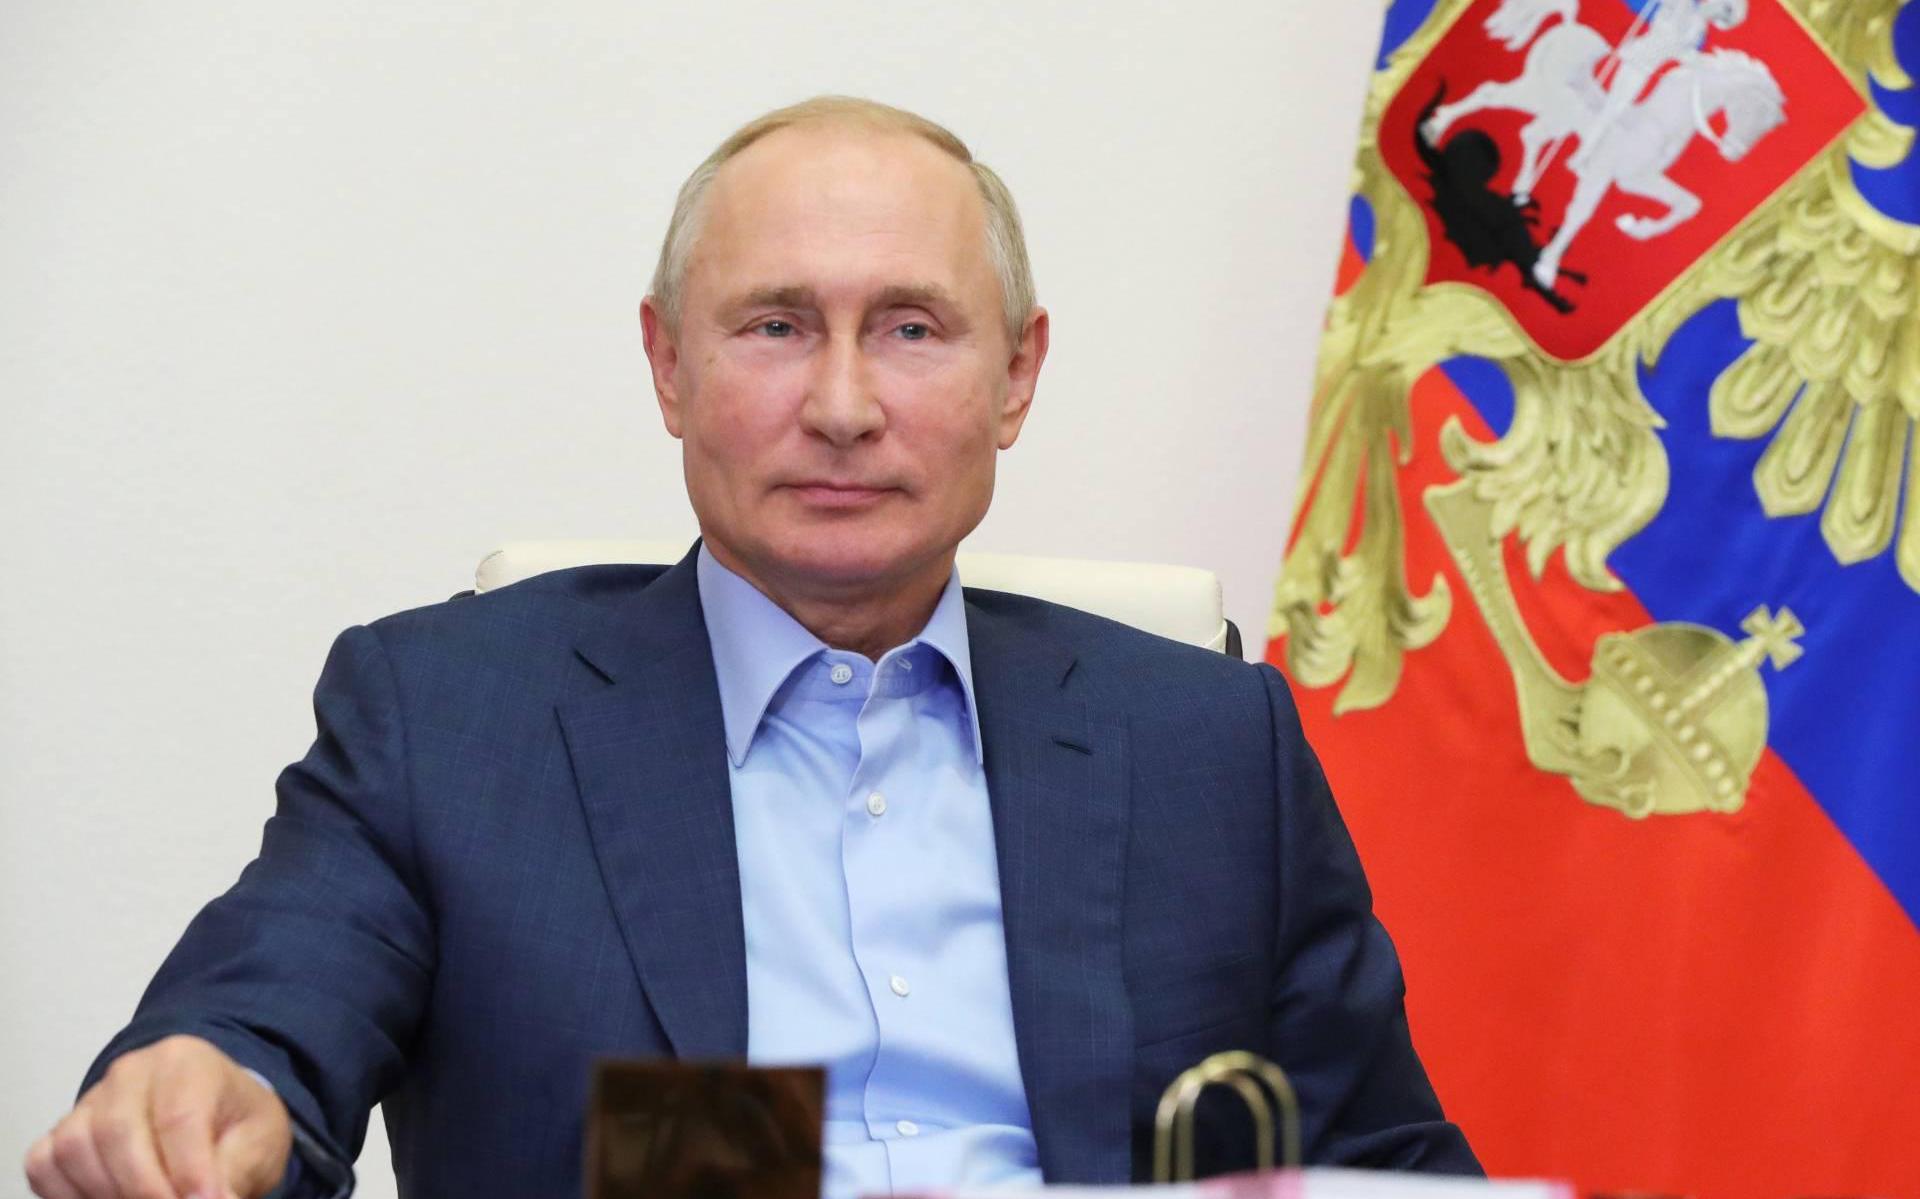 Poetin geeft Wit-Rusland lening van 1,5 miljard dollar